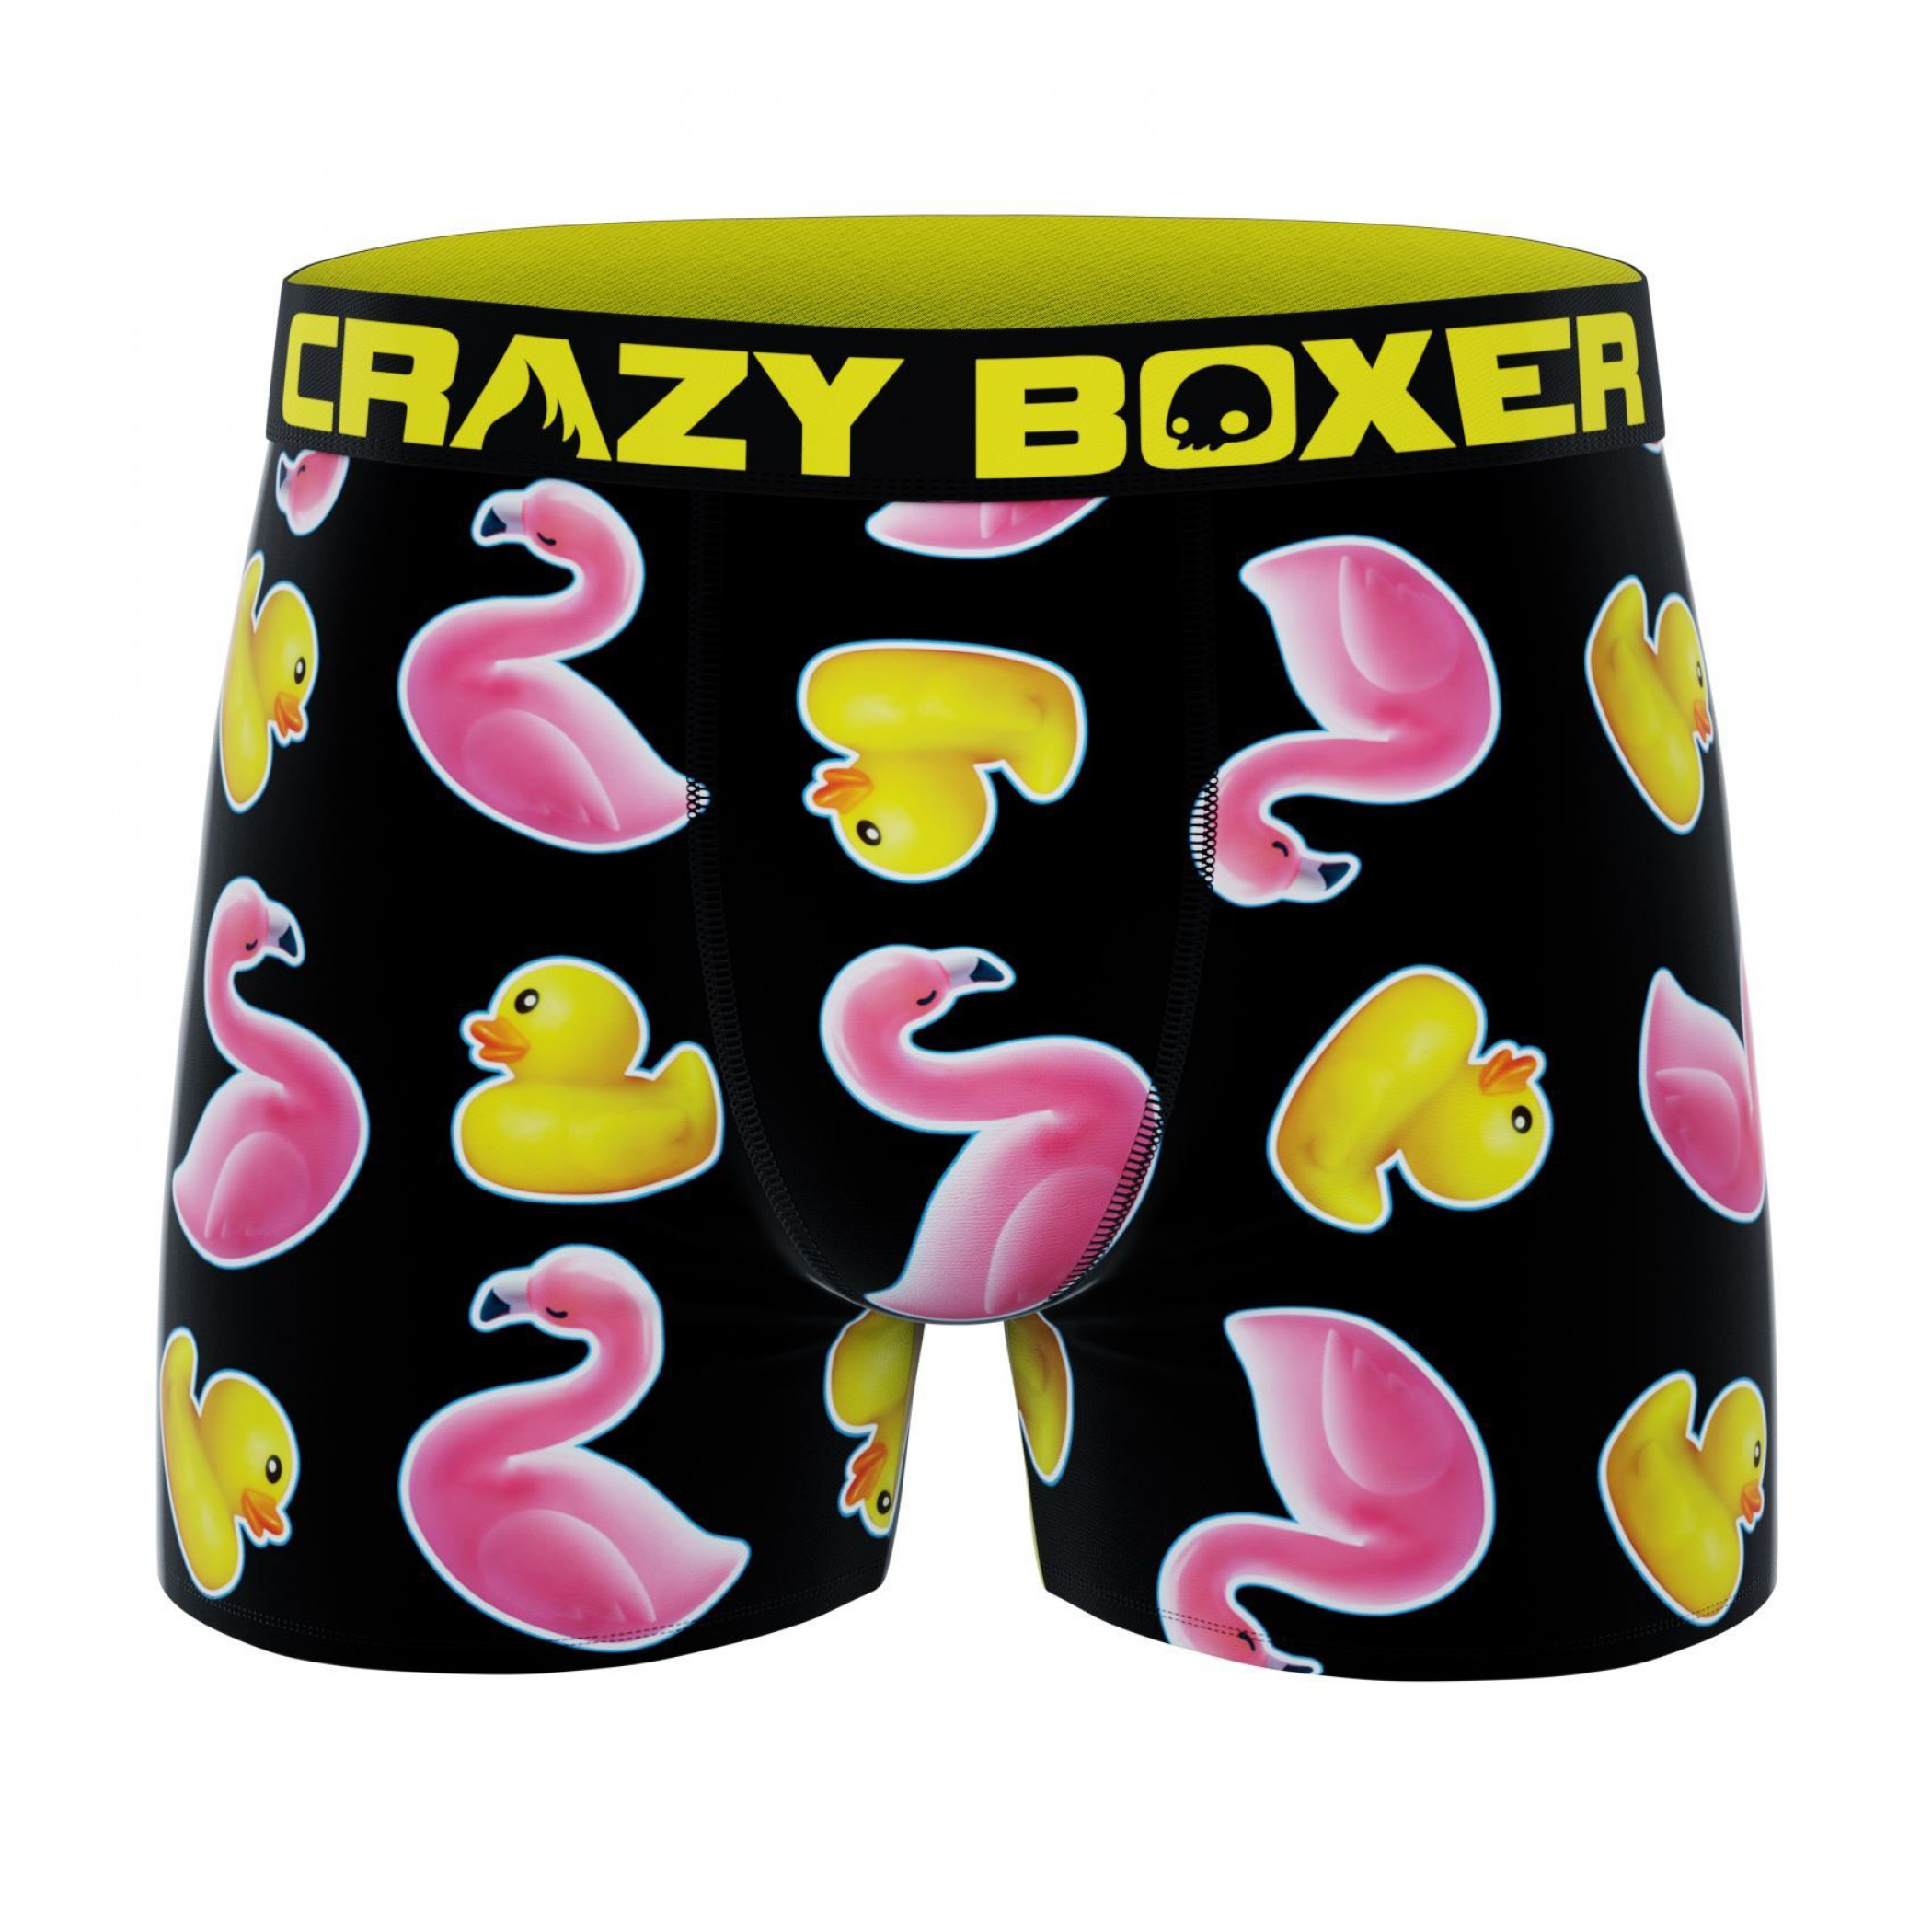 Crazy Boxer Briefs 